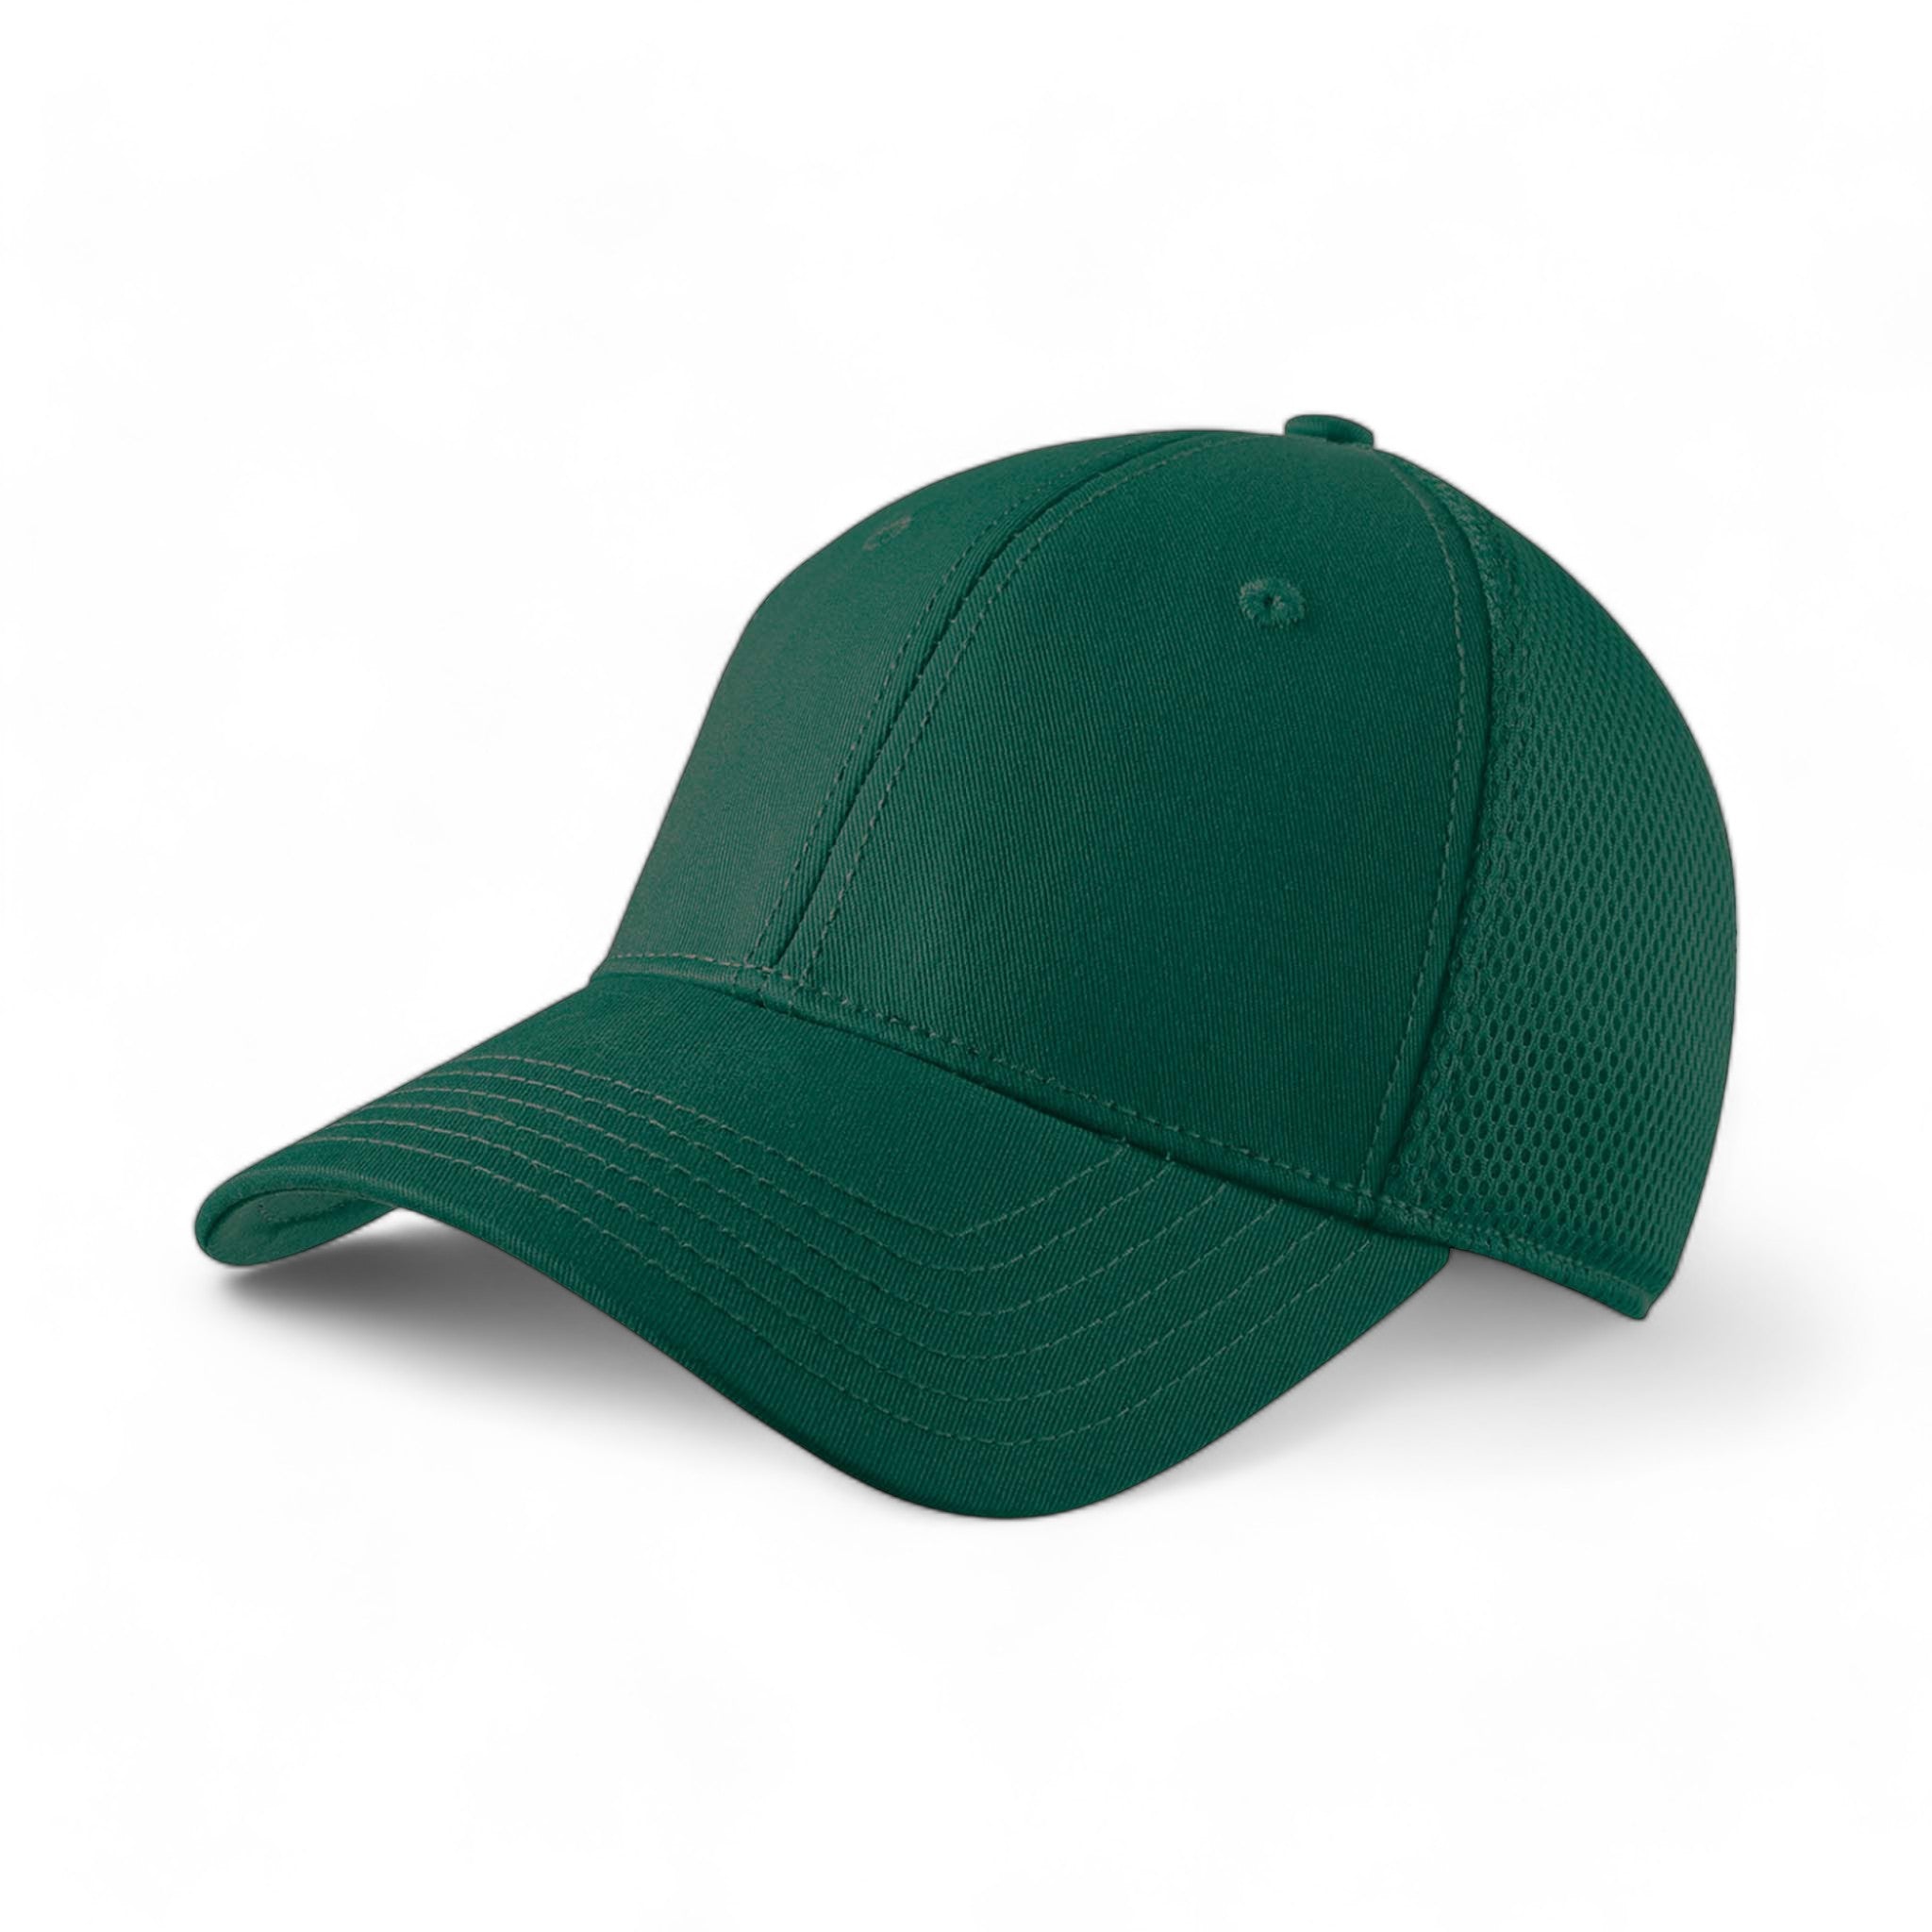 Side view of New Era NE1020 custom hat in dark green